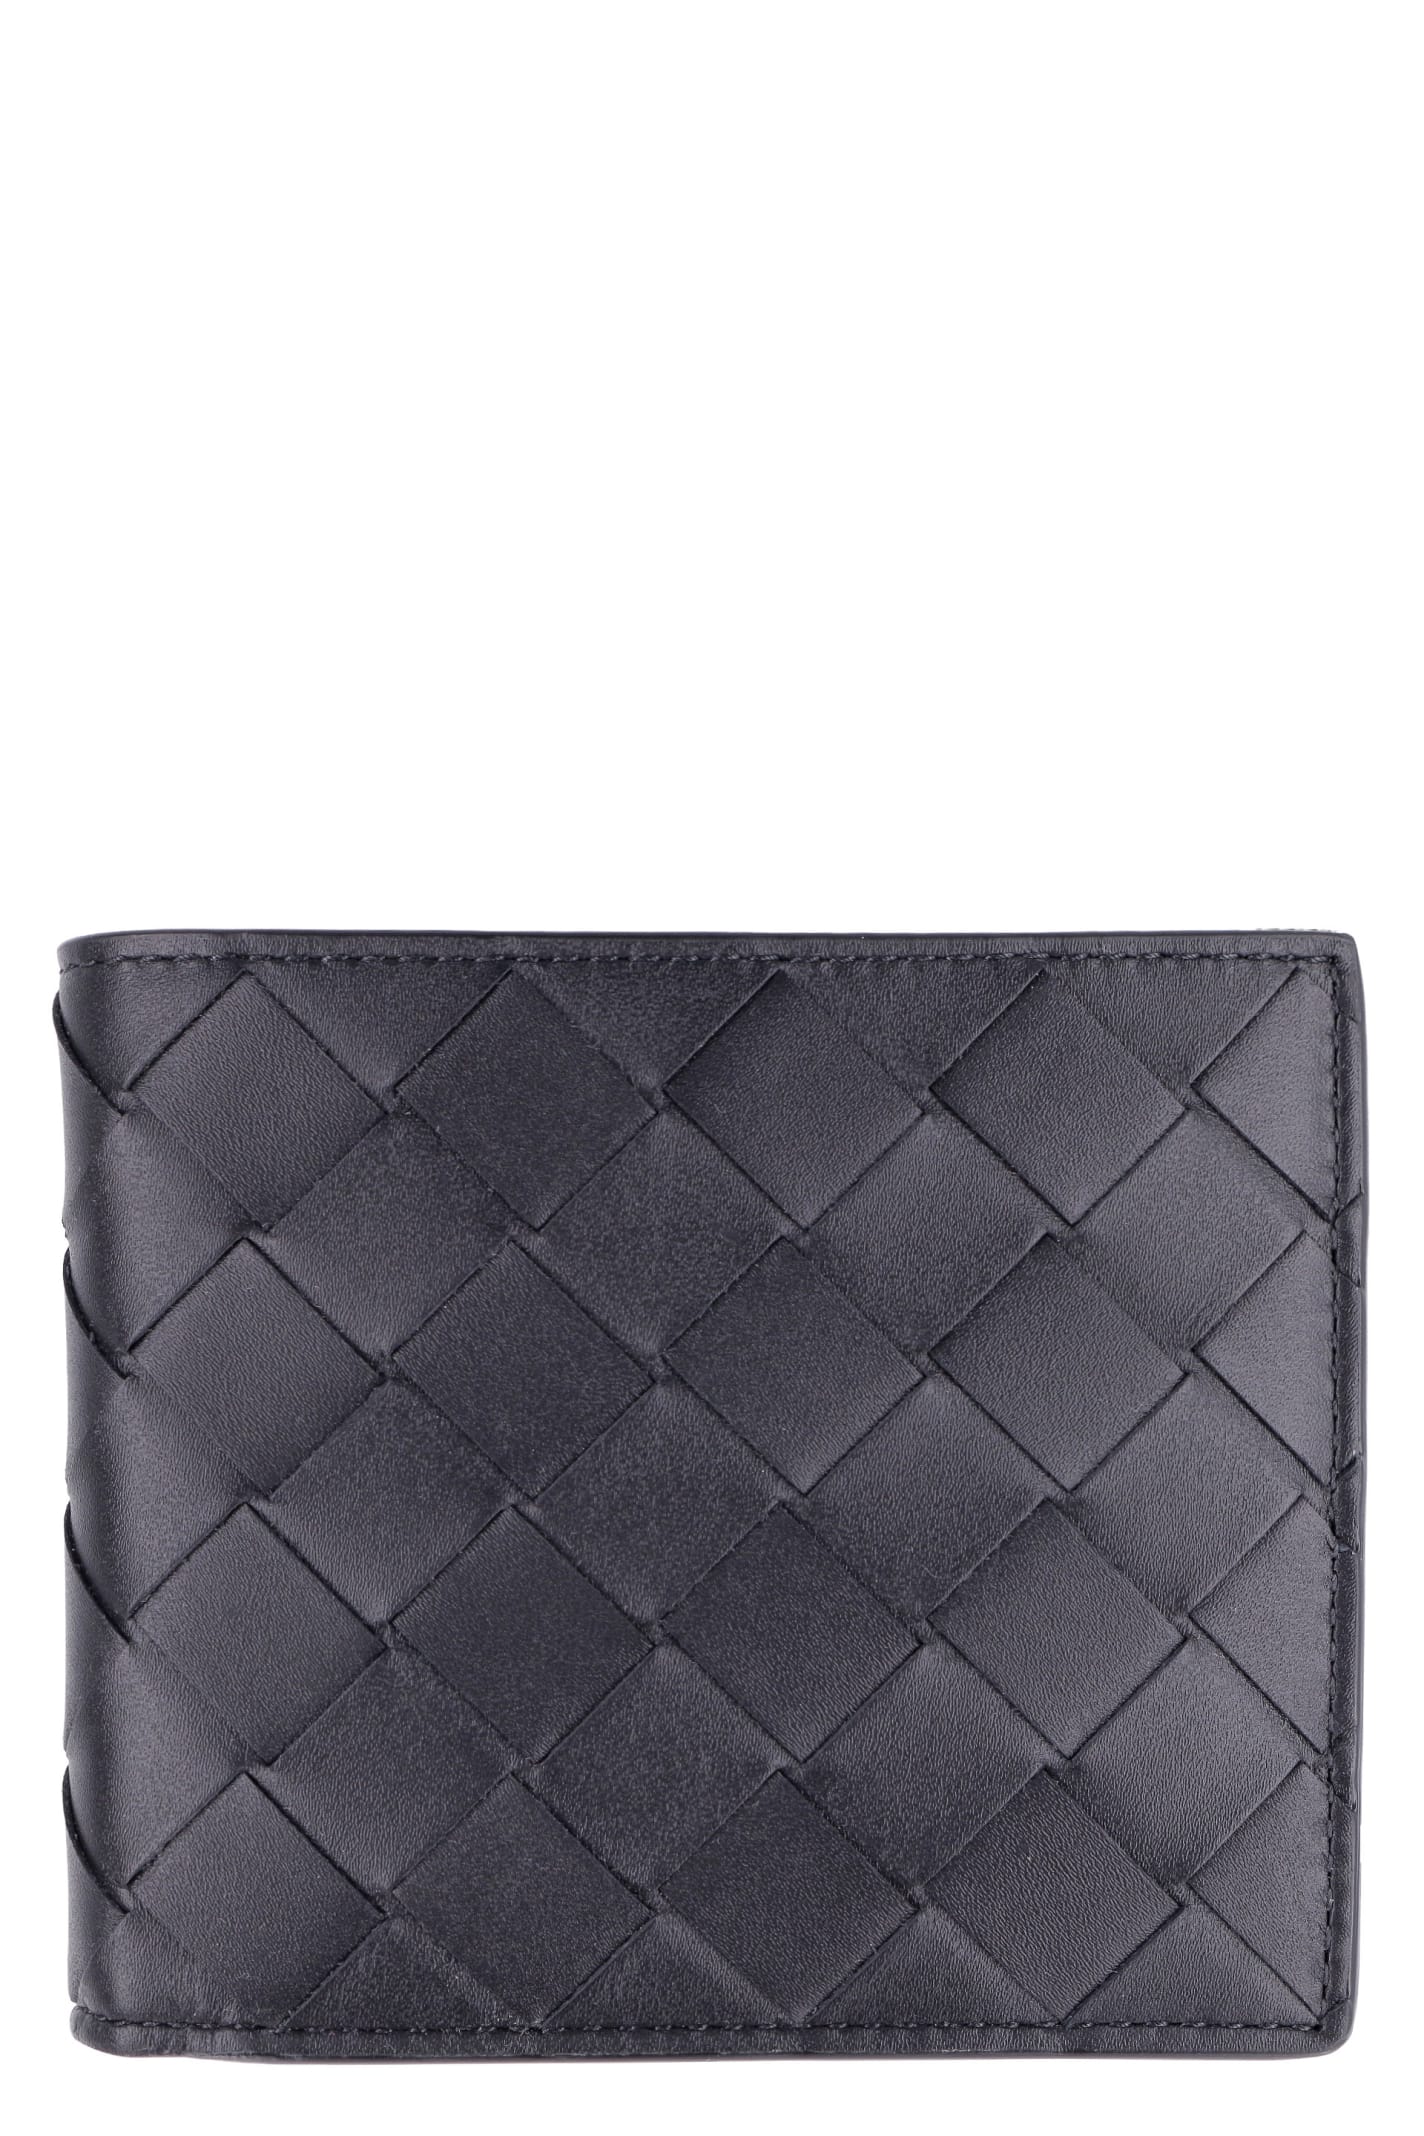 Bottega Veneta Leather Flap-over Wallet